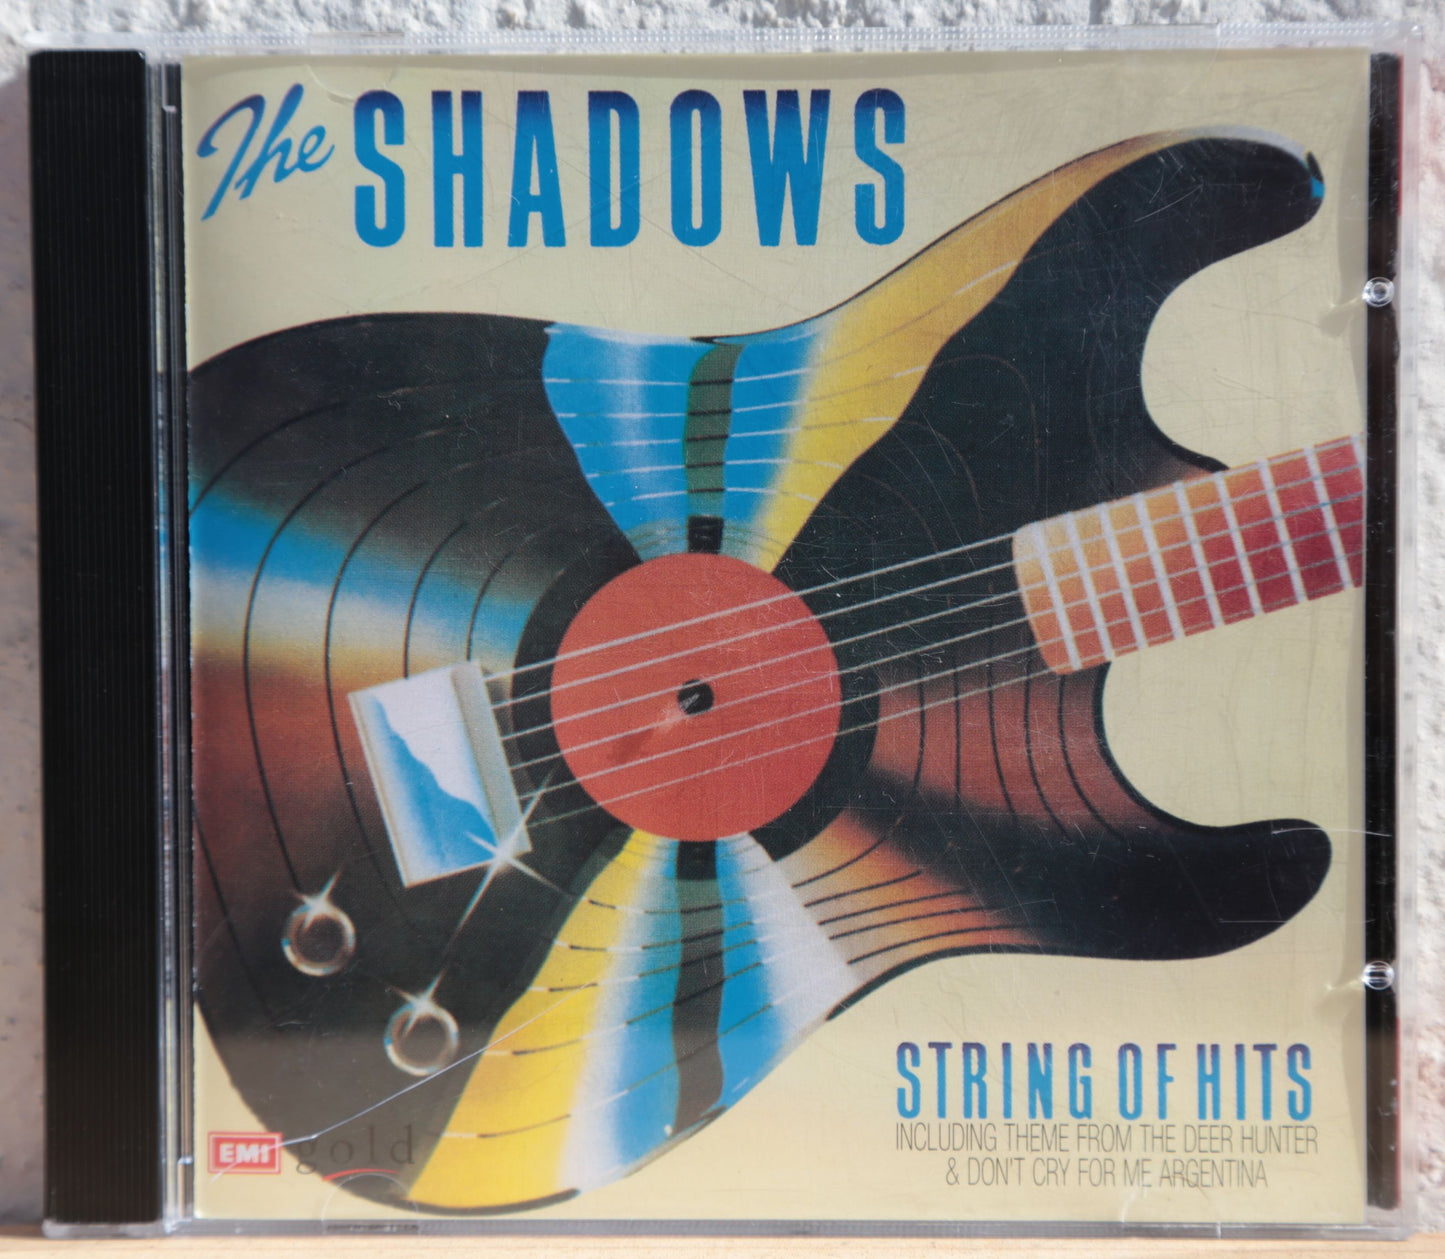 The Shadows - String of Hits (cd)